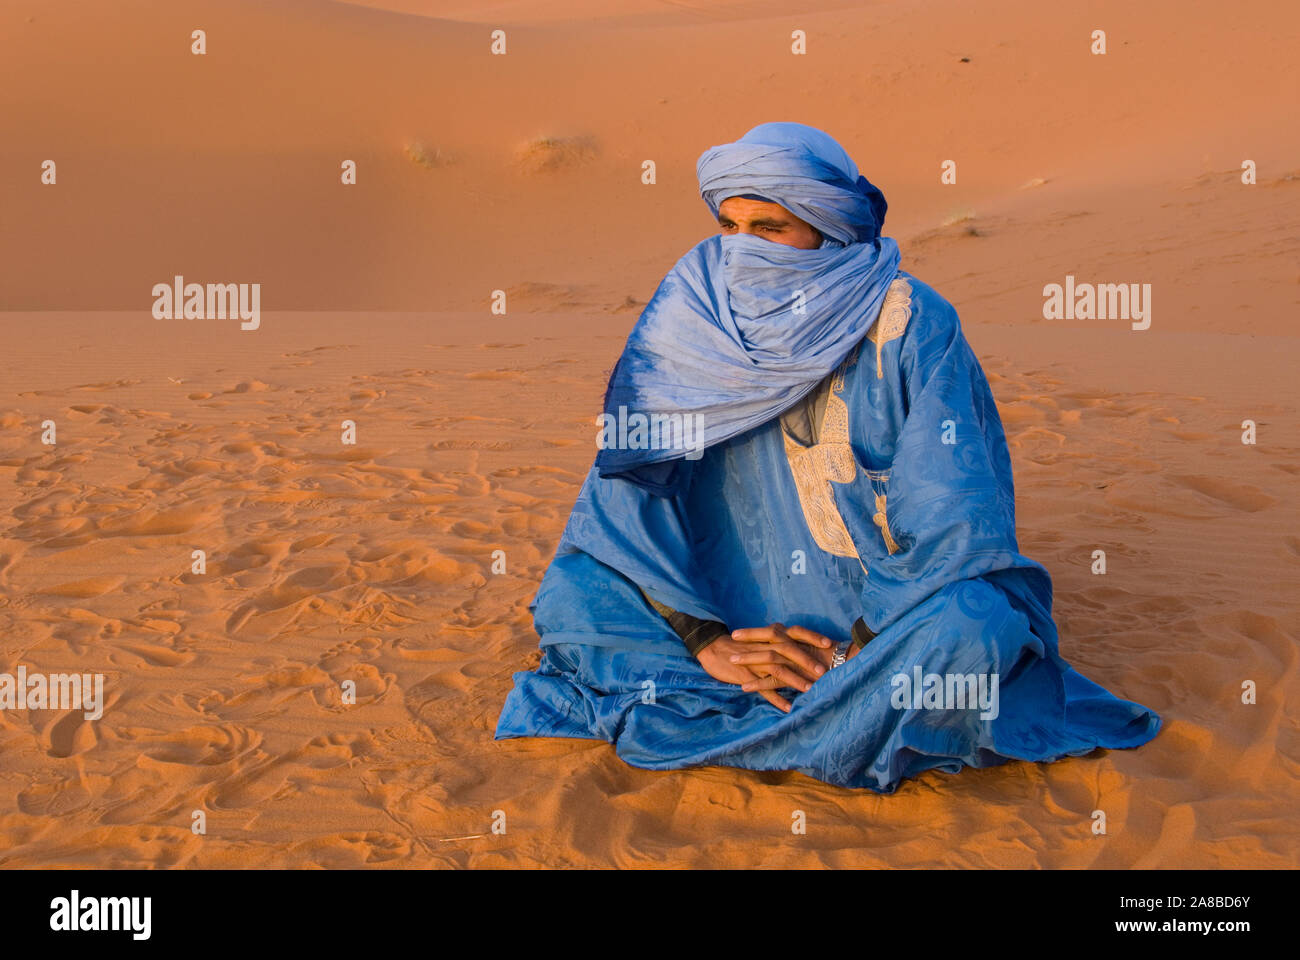 Veiled Tuareg man sitting on sand, Erg Chebbi, Morocco Stock Photo